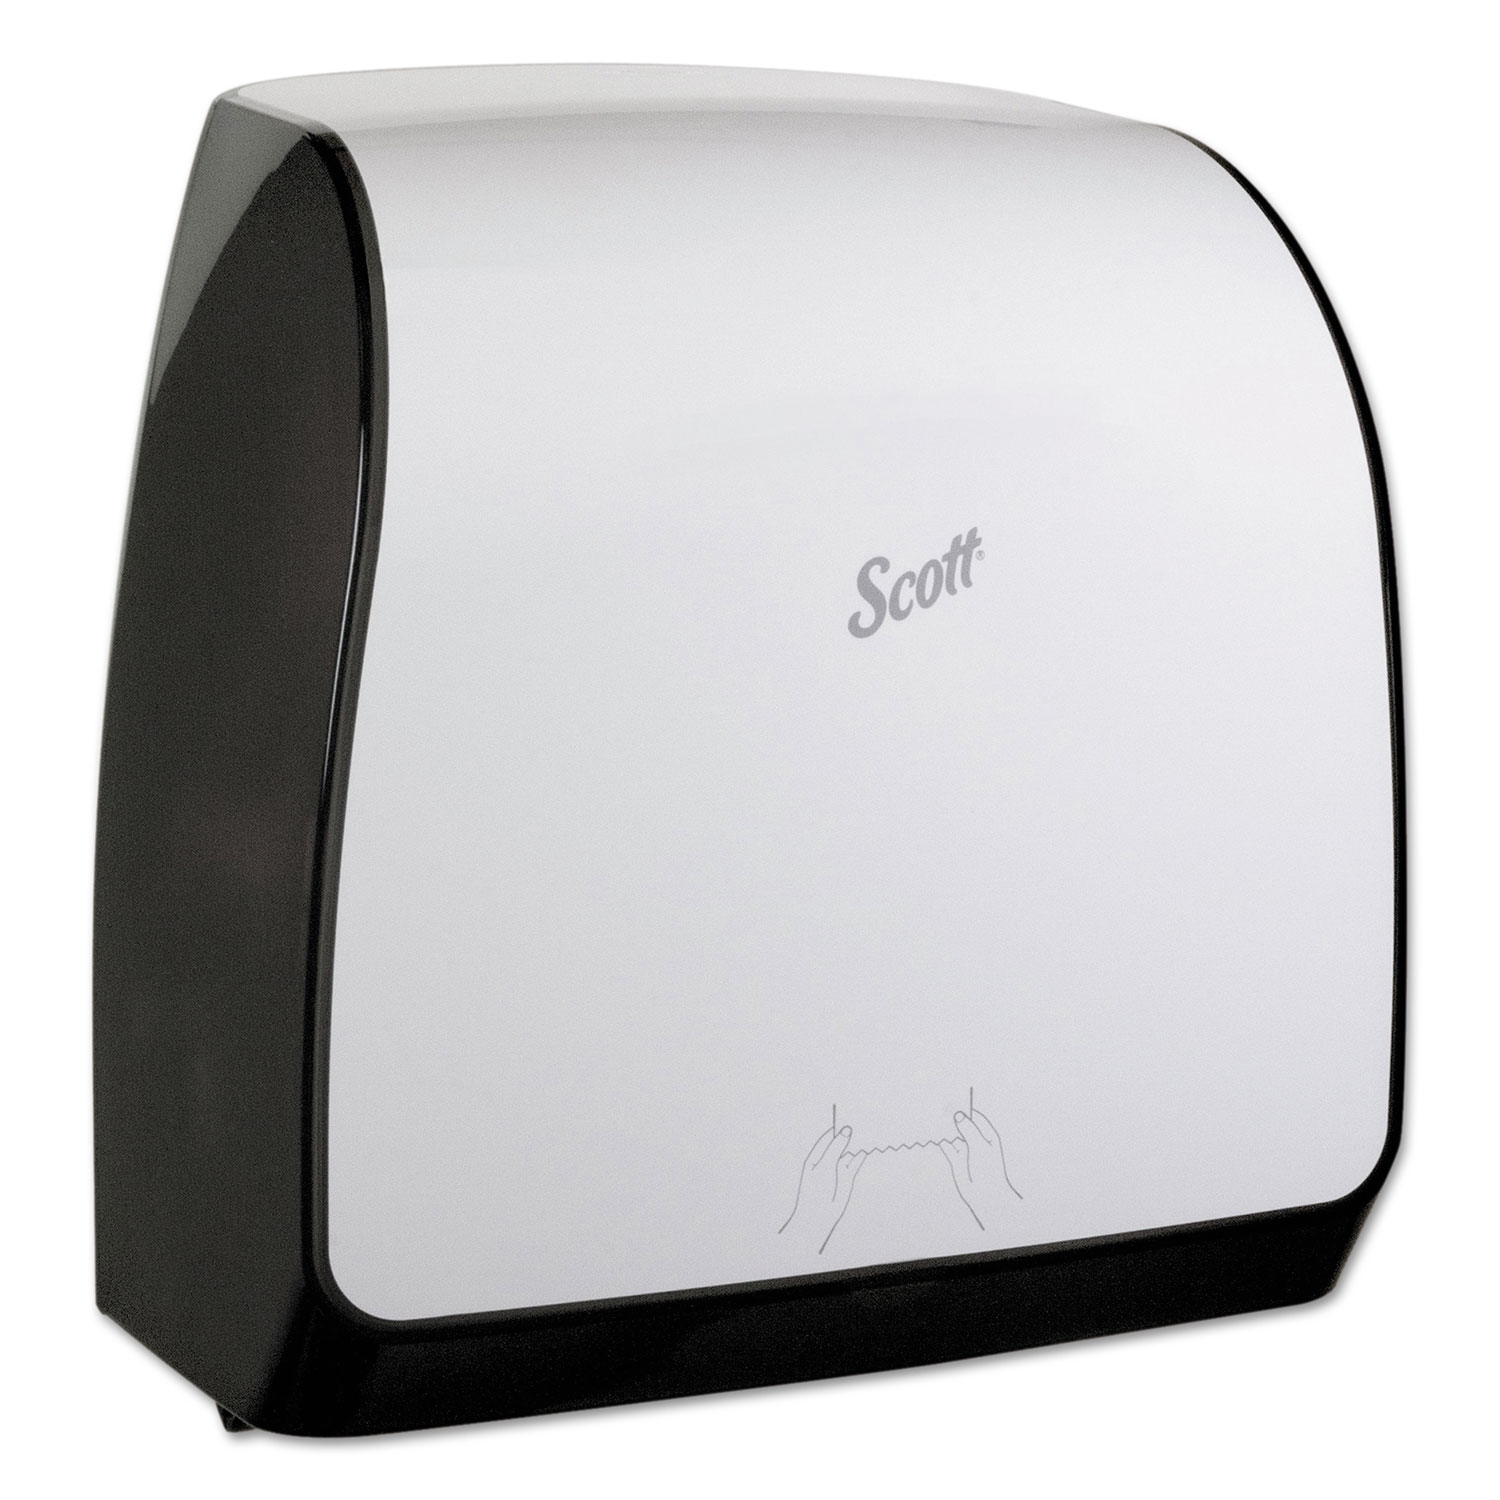 Control Slimroll Manual Towel Dispenser, 12.63 x 10.2 x 16.13, White